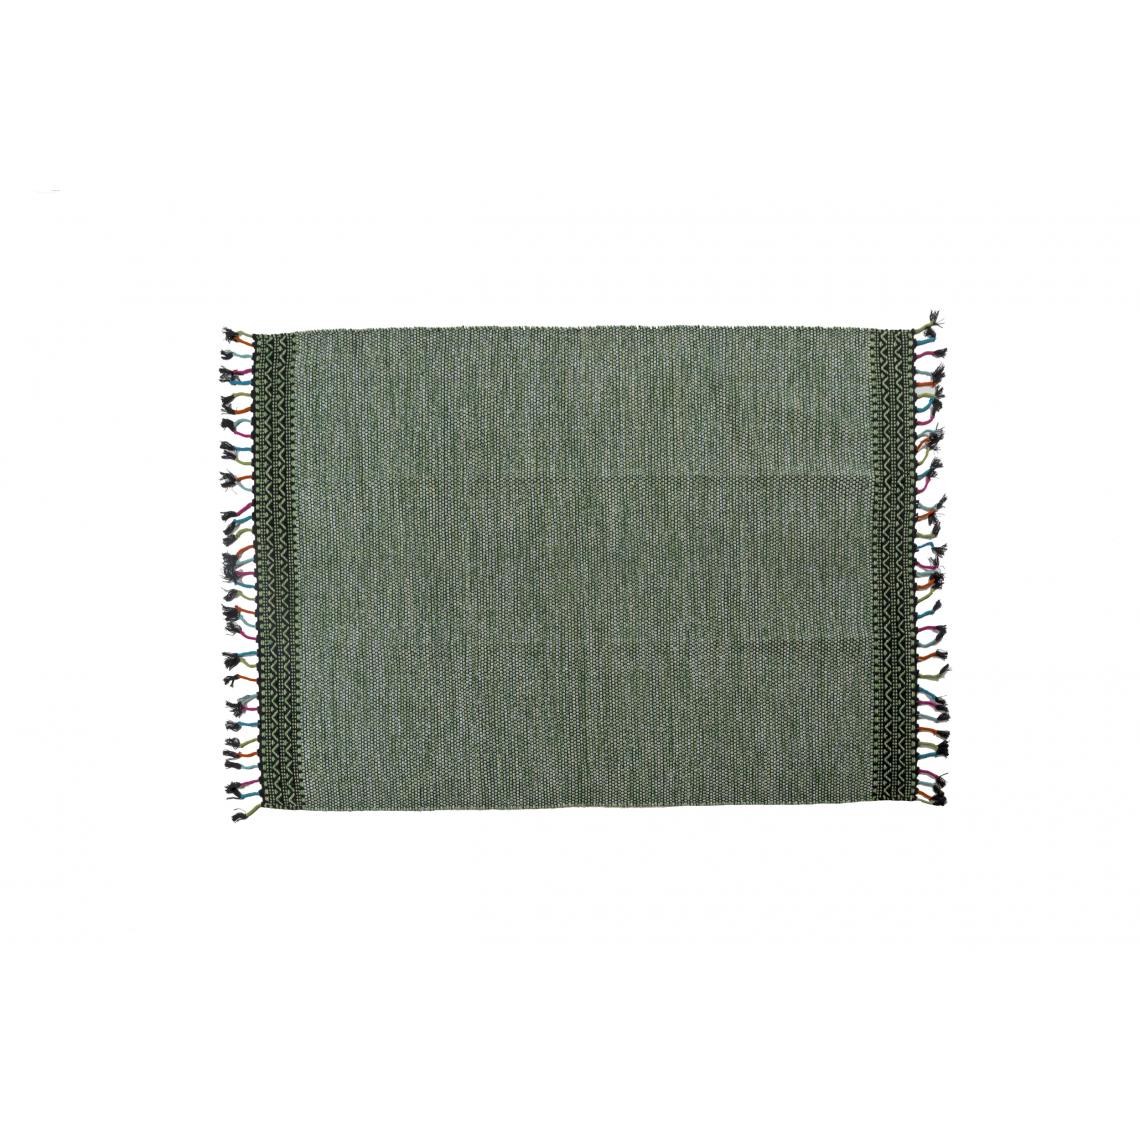 Alter - Tapis moderne Dallas, style kilim, 100% coton, vert, 230x160cm - Tapis